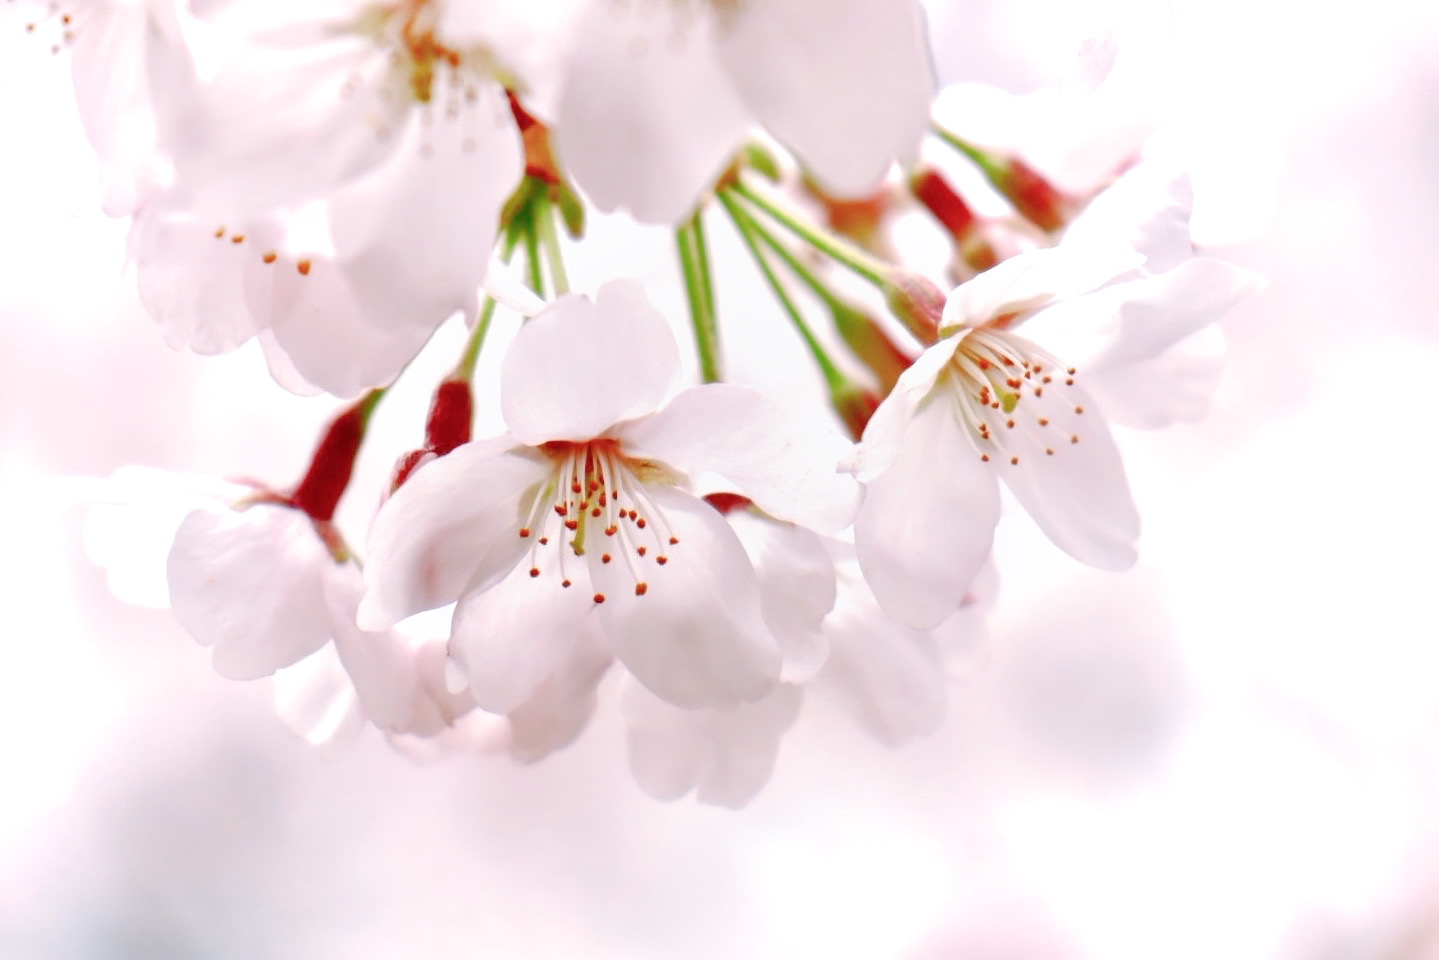 Dreamy cherry blossoms